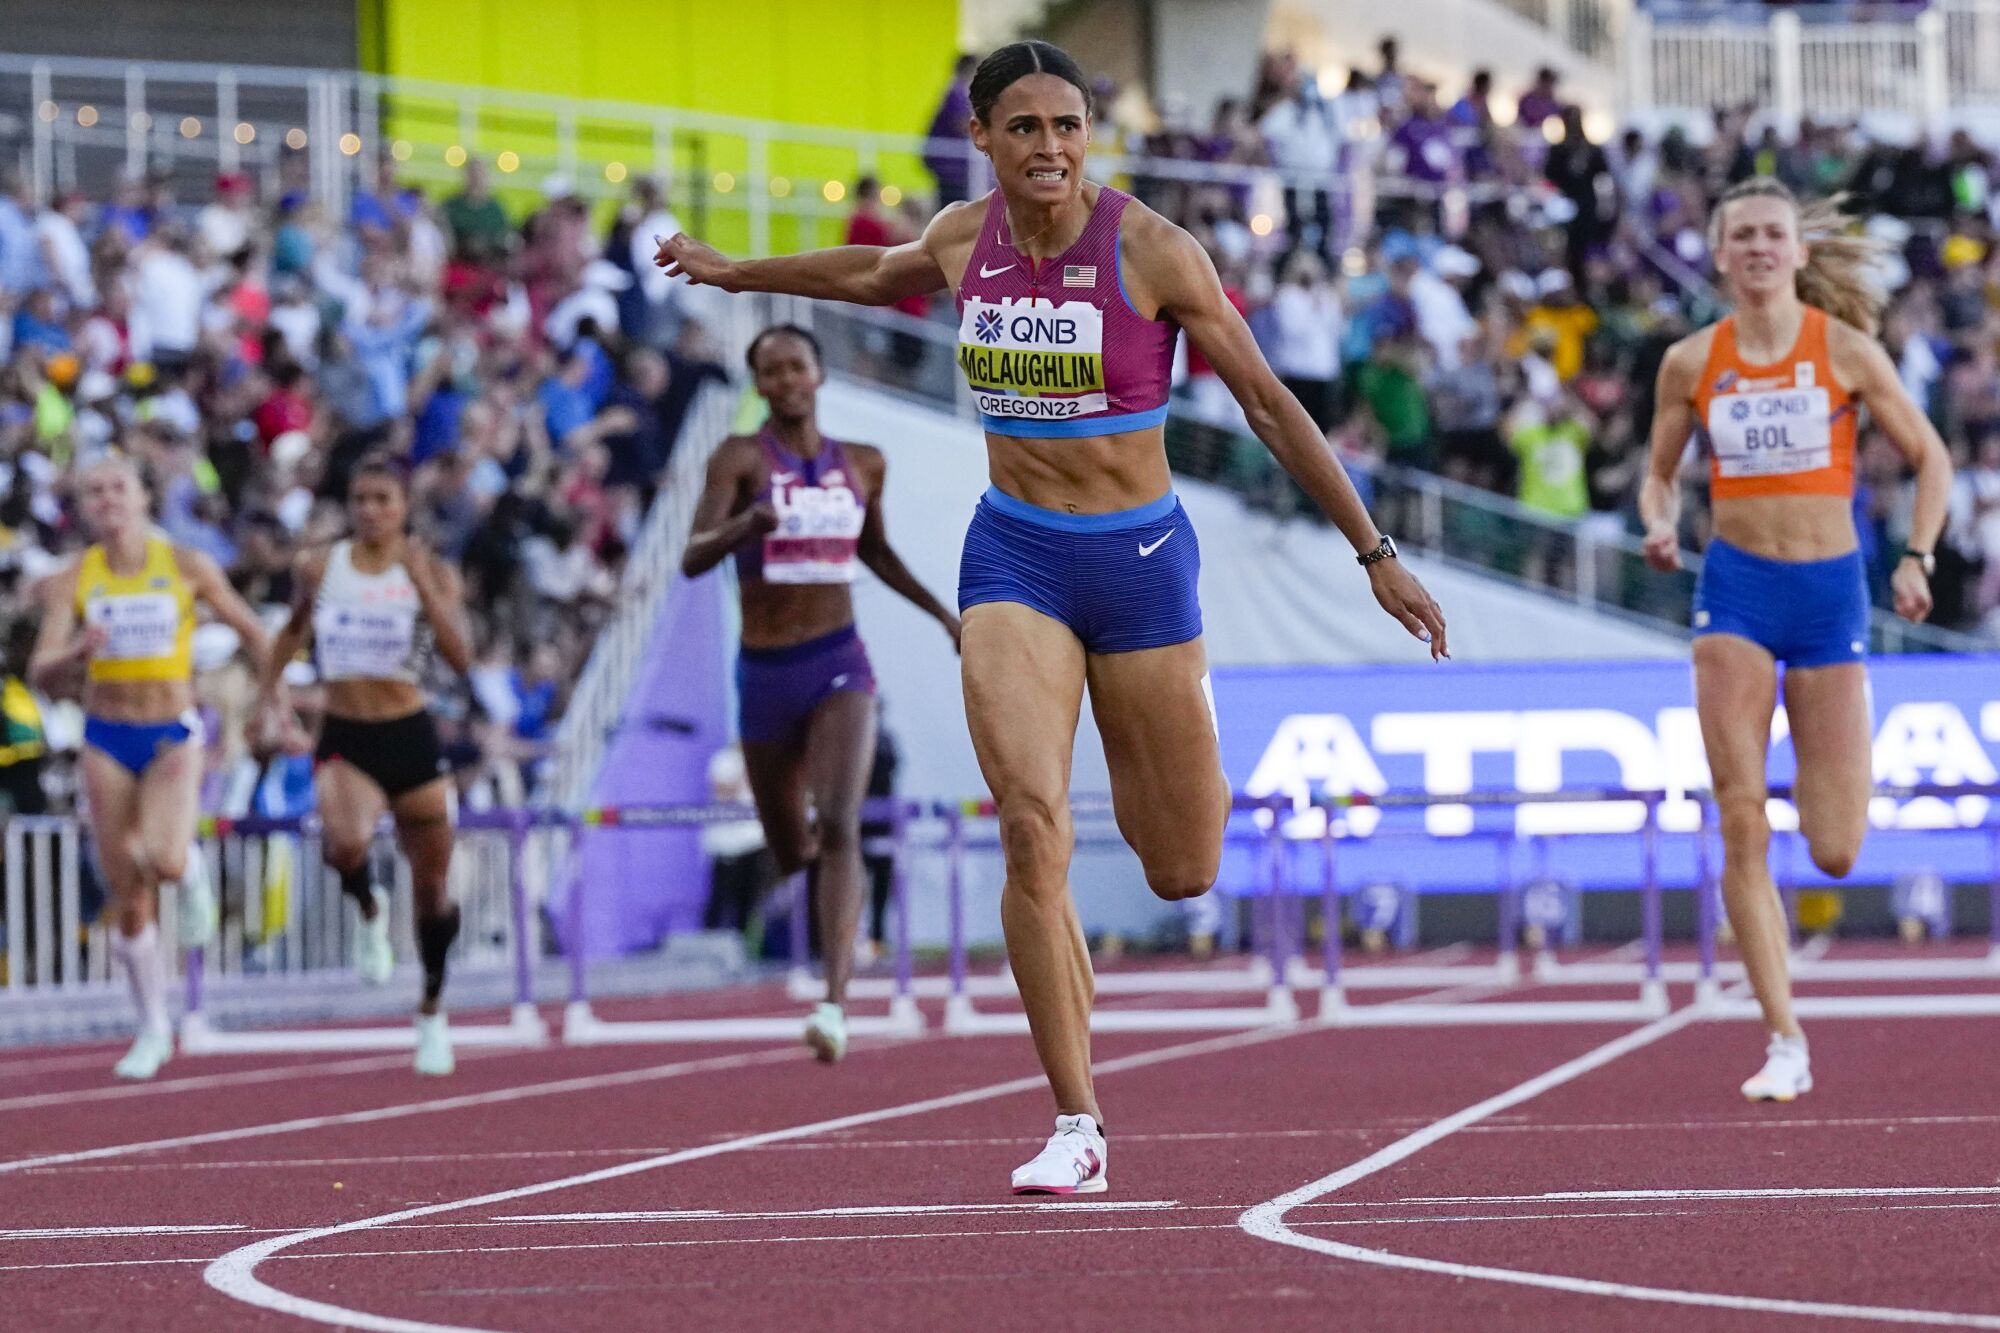 Sydney McLaughlin-Levrone wins gold in the women's 400-meter hurdles.